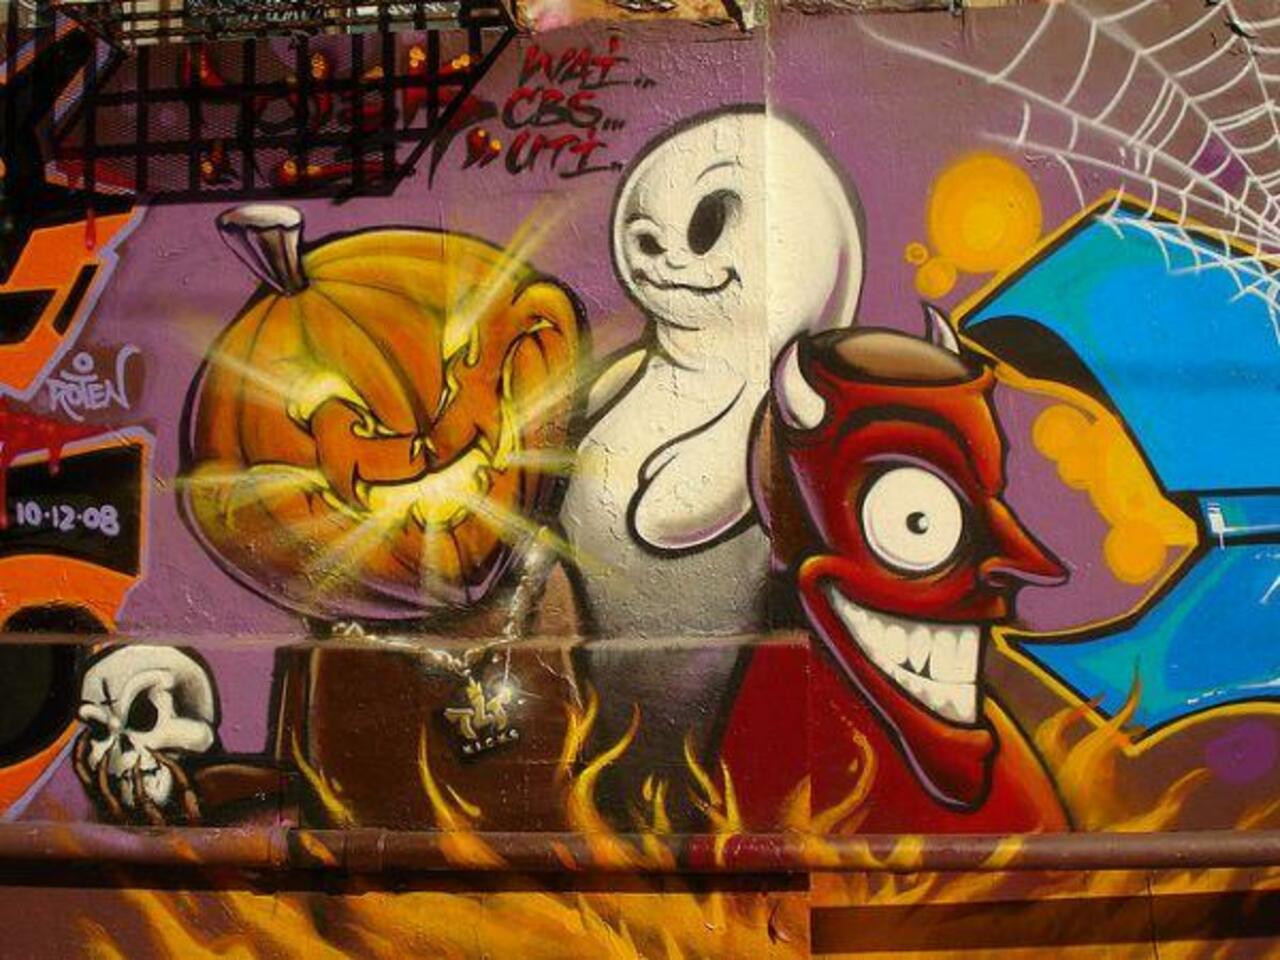 Halloween-themed graffiti #streetart #graffiti #urbanart #art #murals #Halloween http://t.co/2TL0a5D8kS